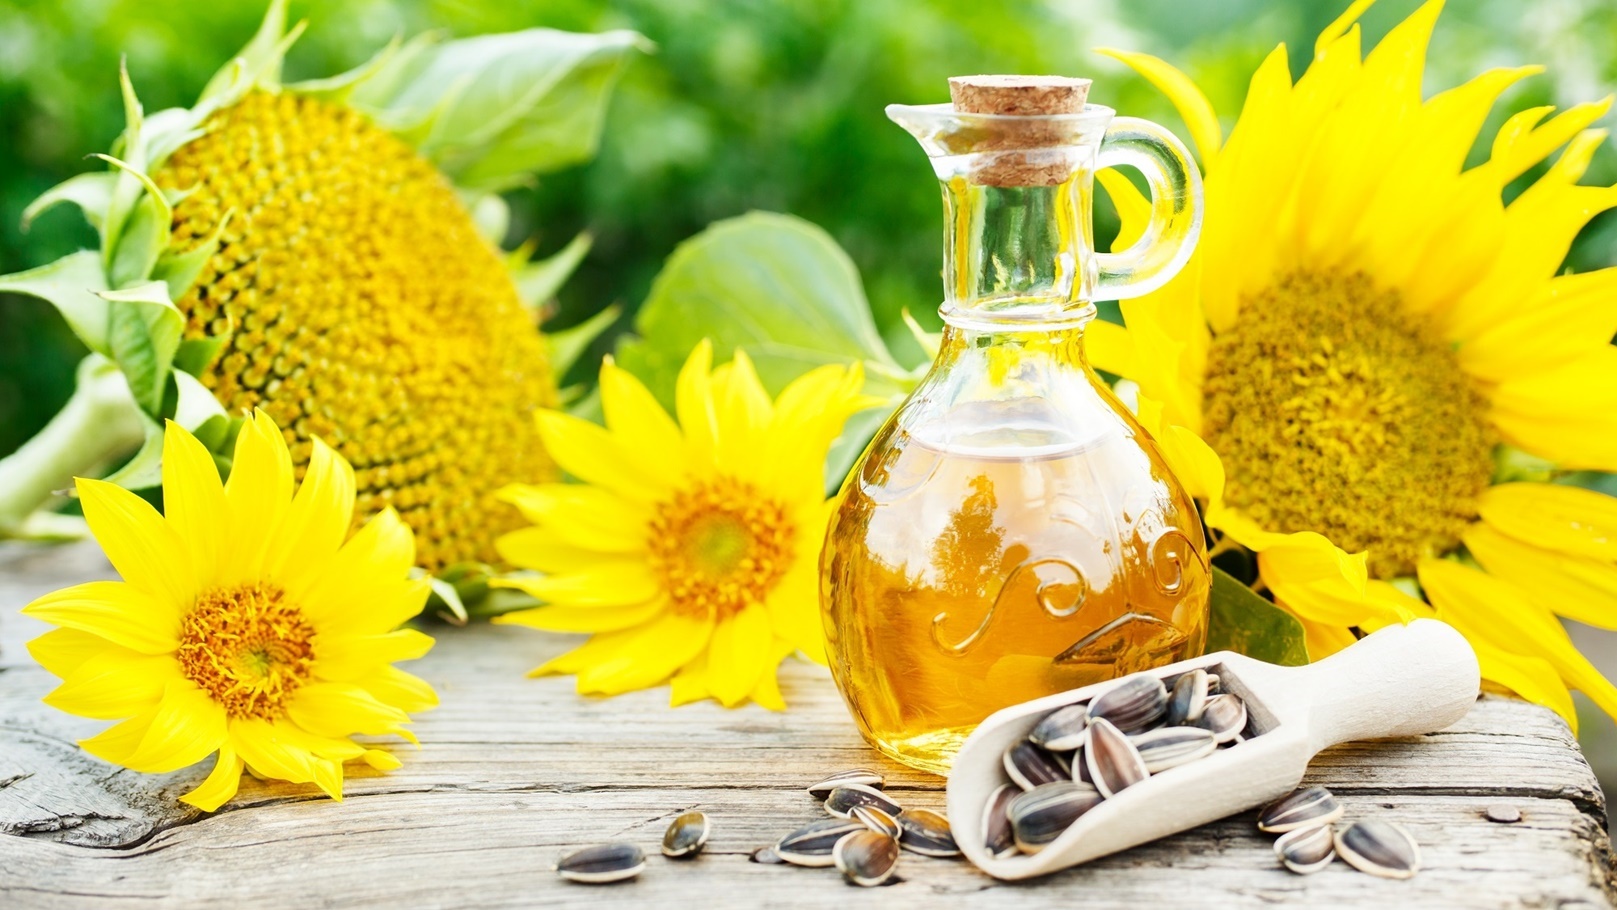 sunflower-oil-with-seeds-زيت عباد الشمس